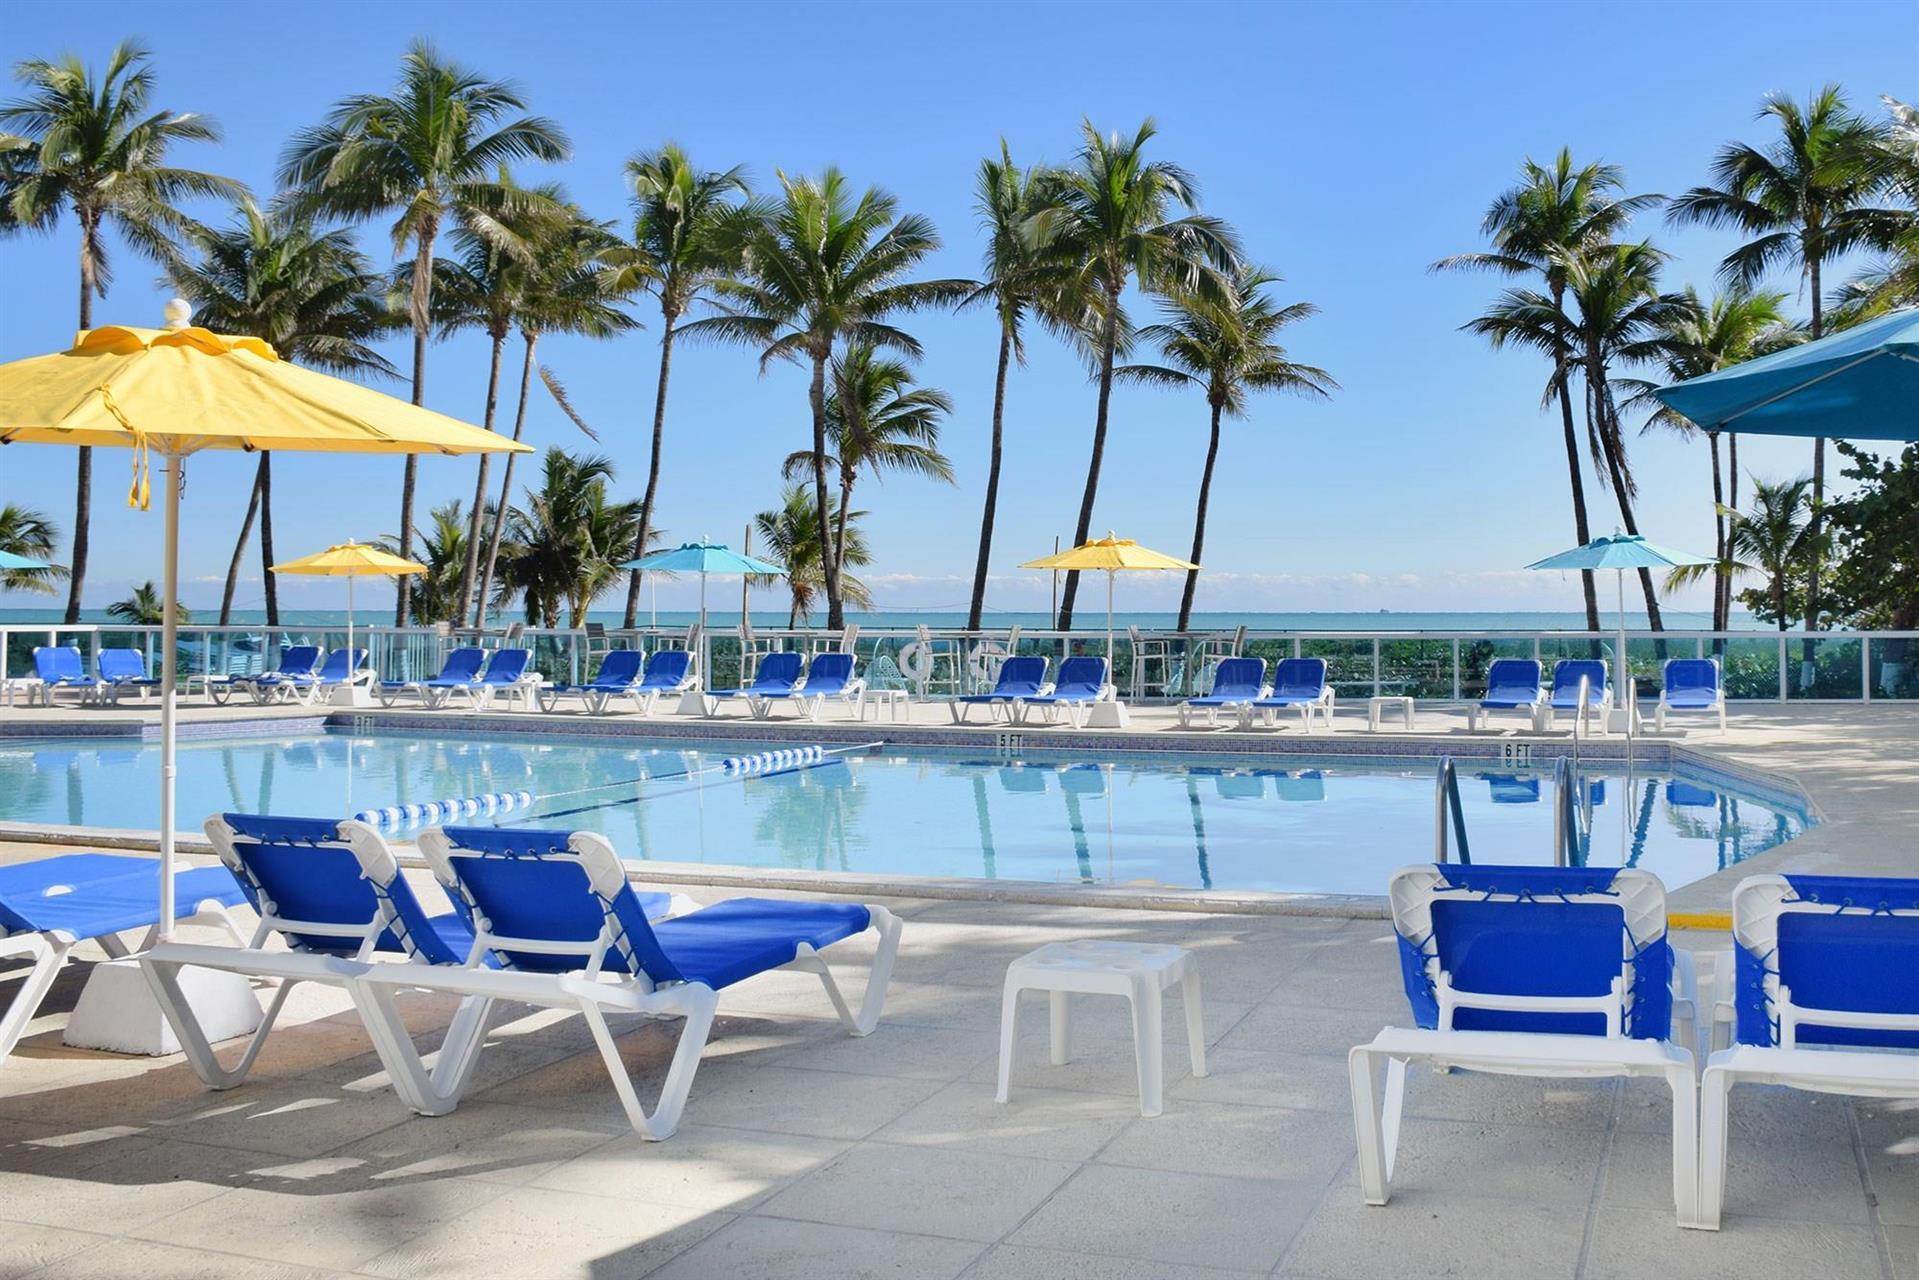 Seacoast Suite Hotel in Miami Beach, FL